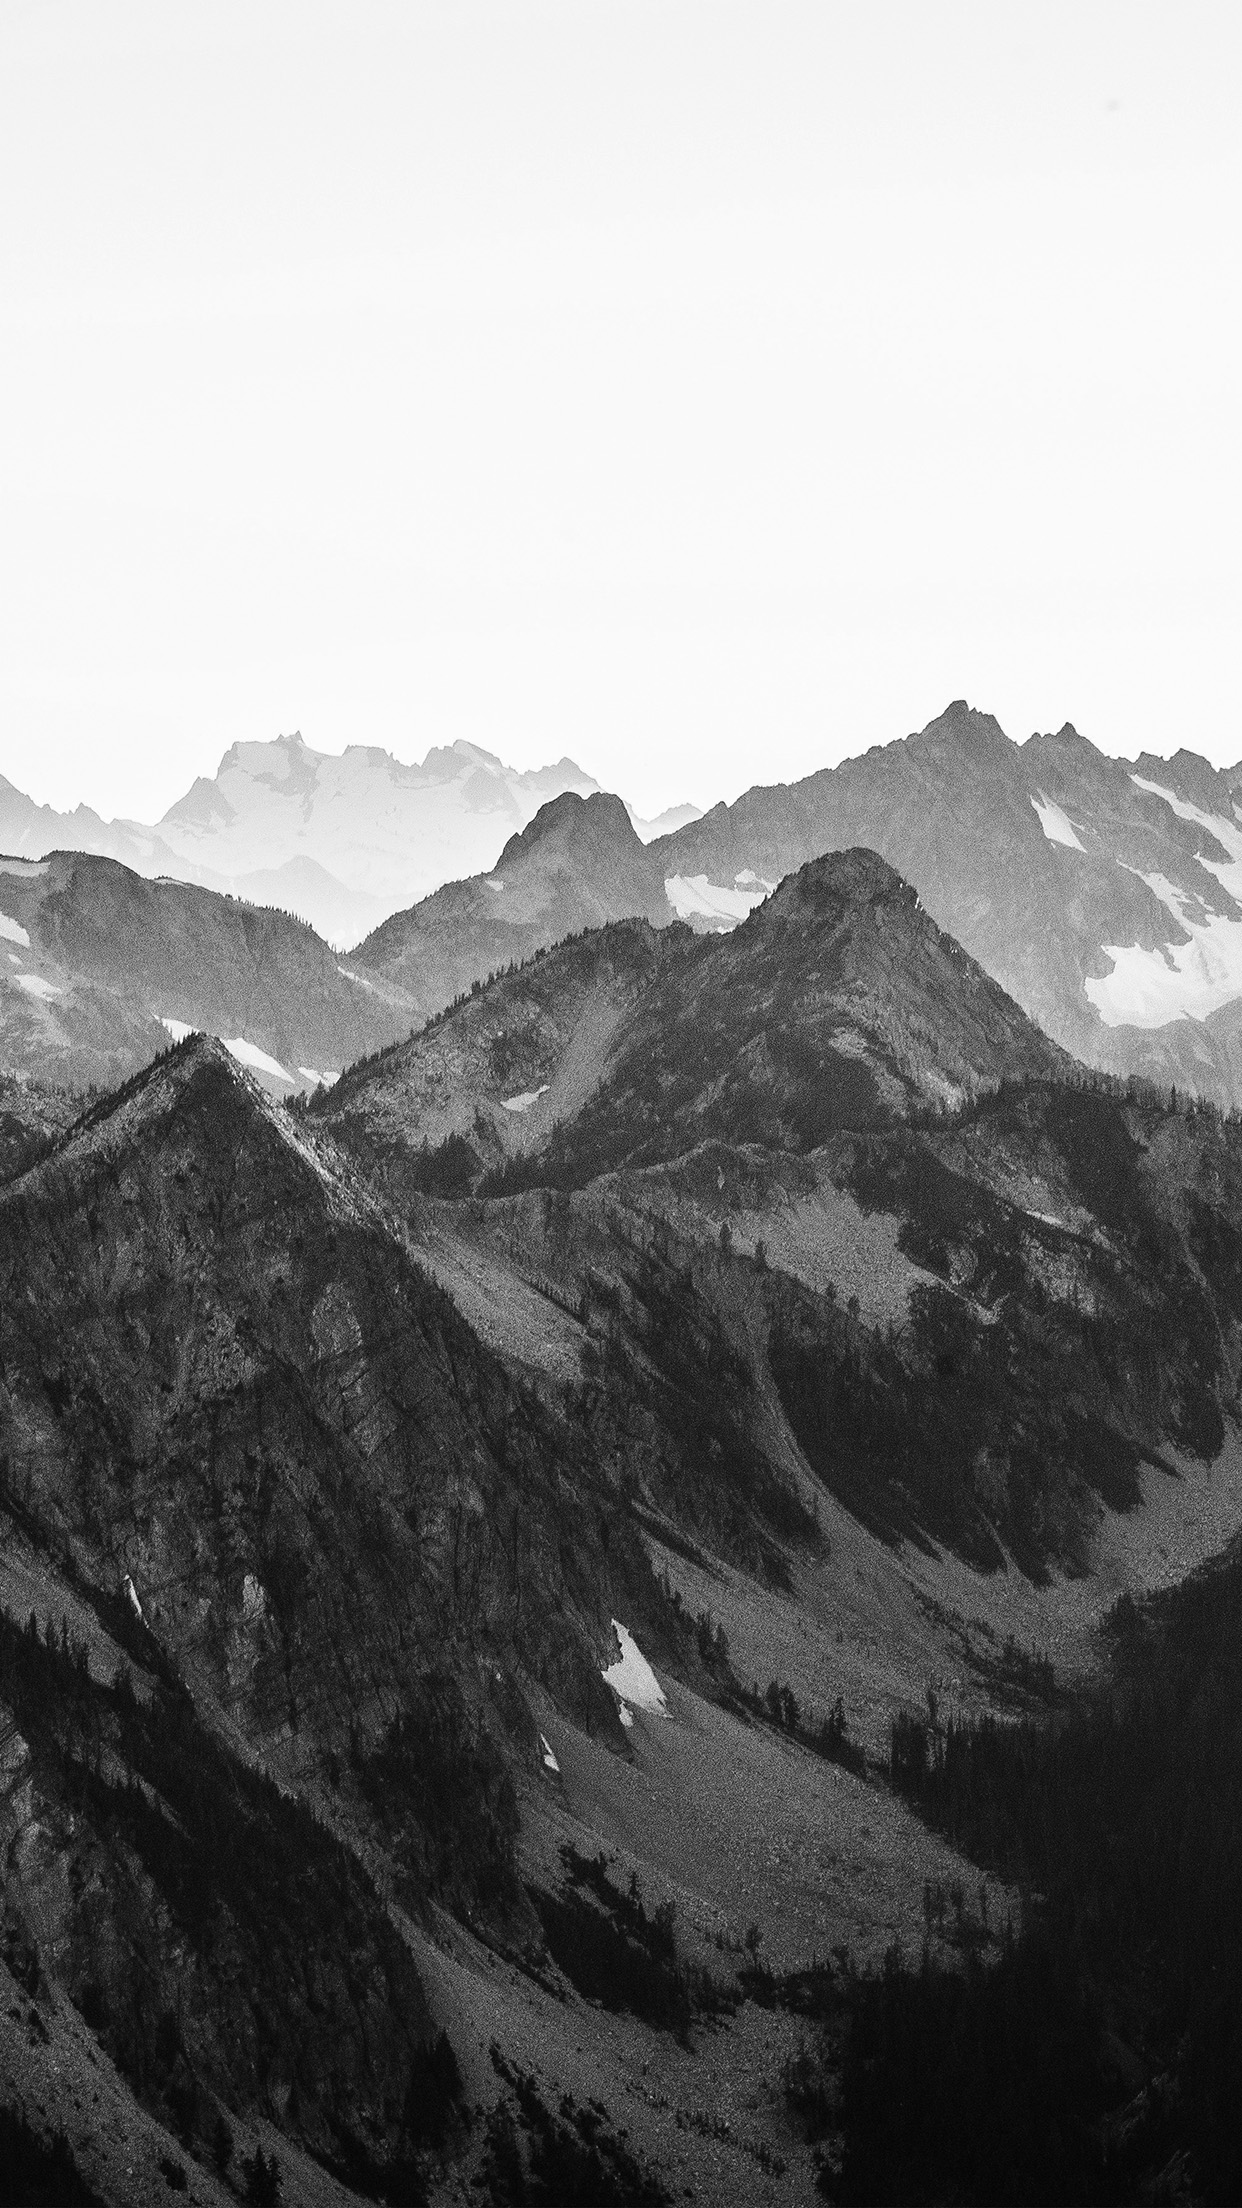 iPhone X wallpaper. mountain layer view nature top bw dark